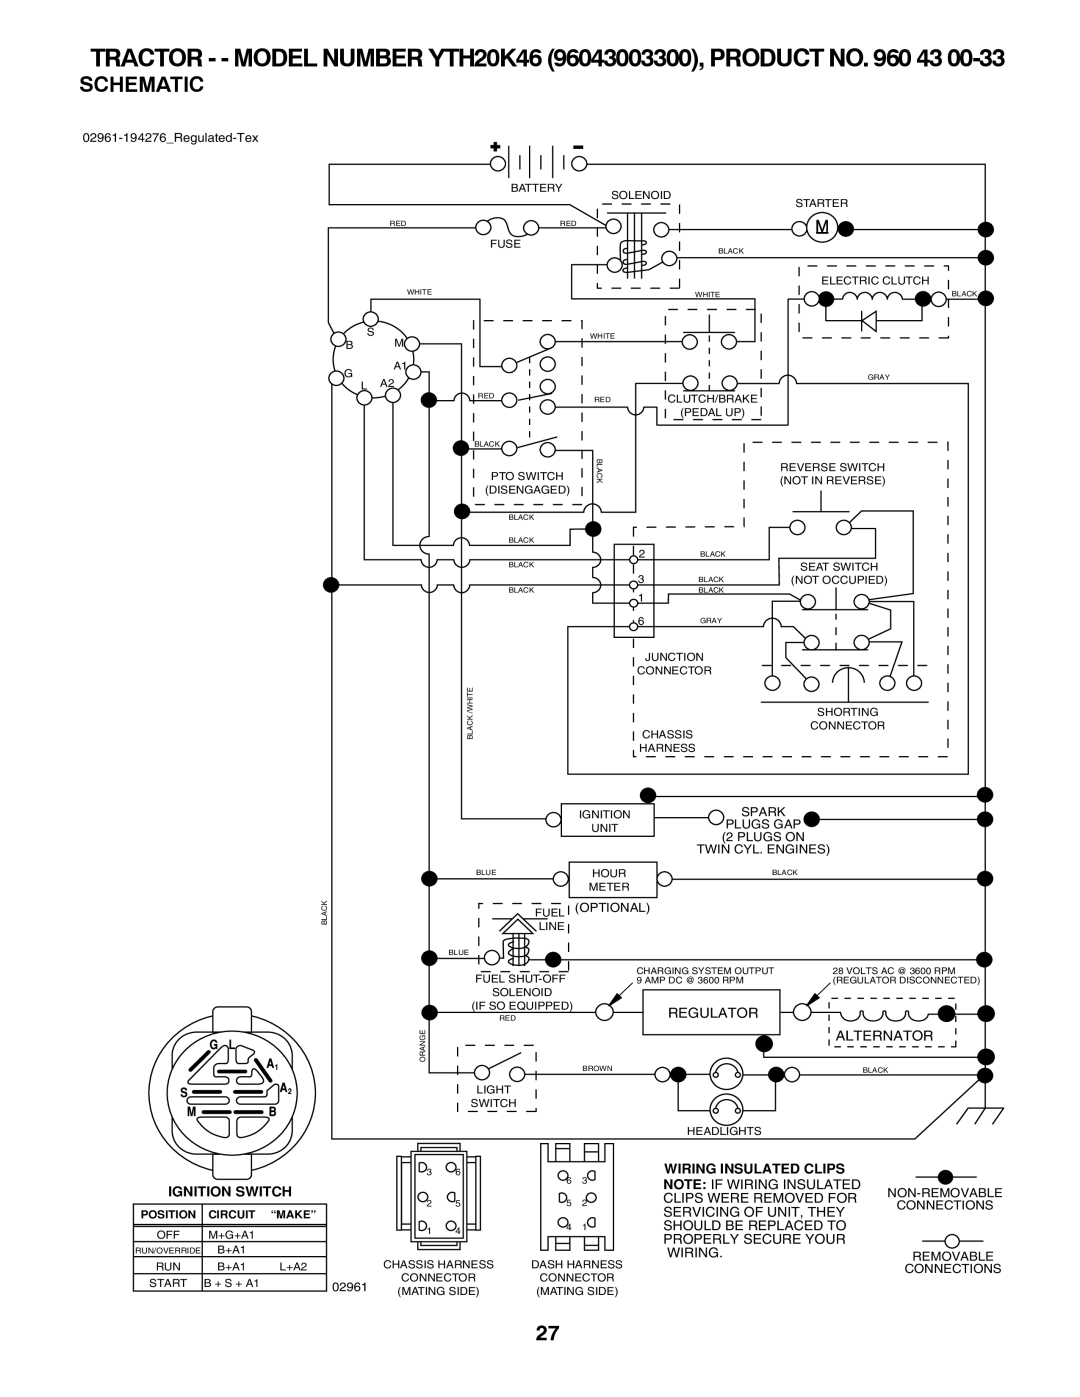 Husqvarna YTH20K46 owner manual Schematic, Position, Circuit, “Make” 